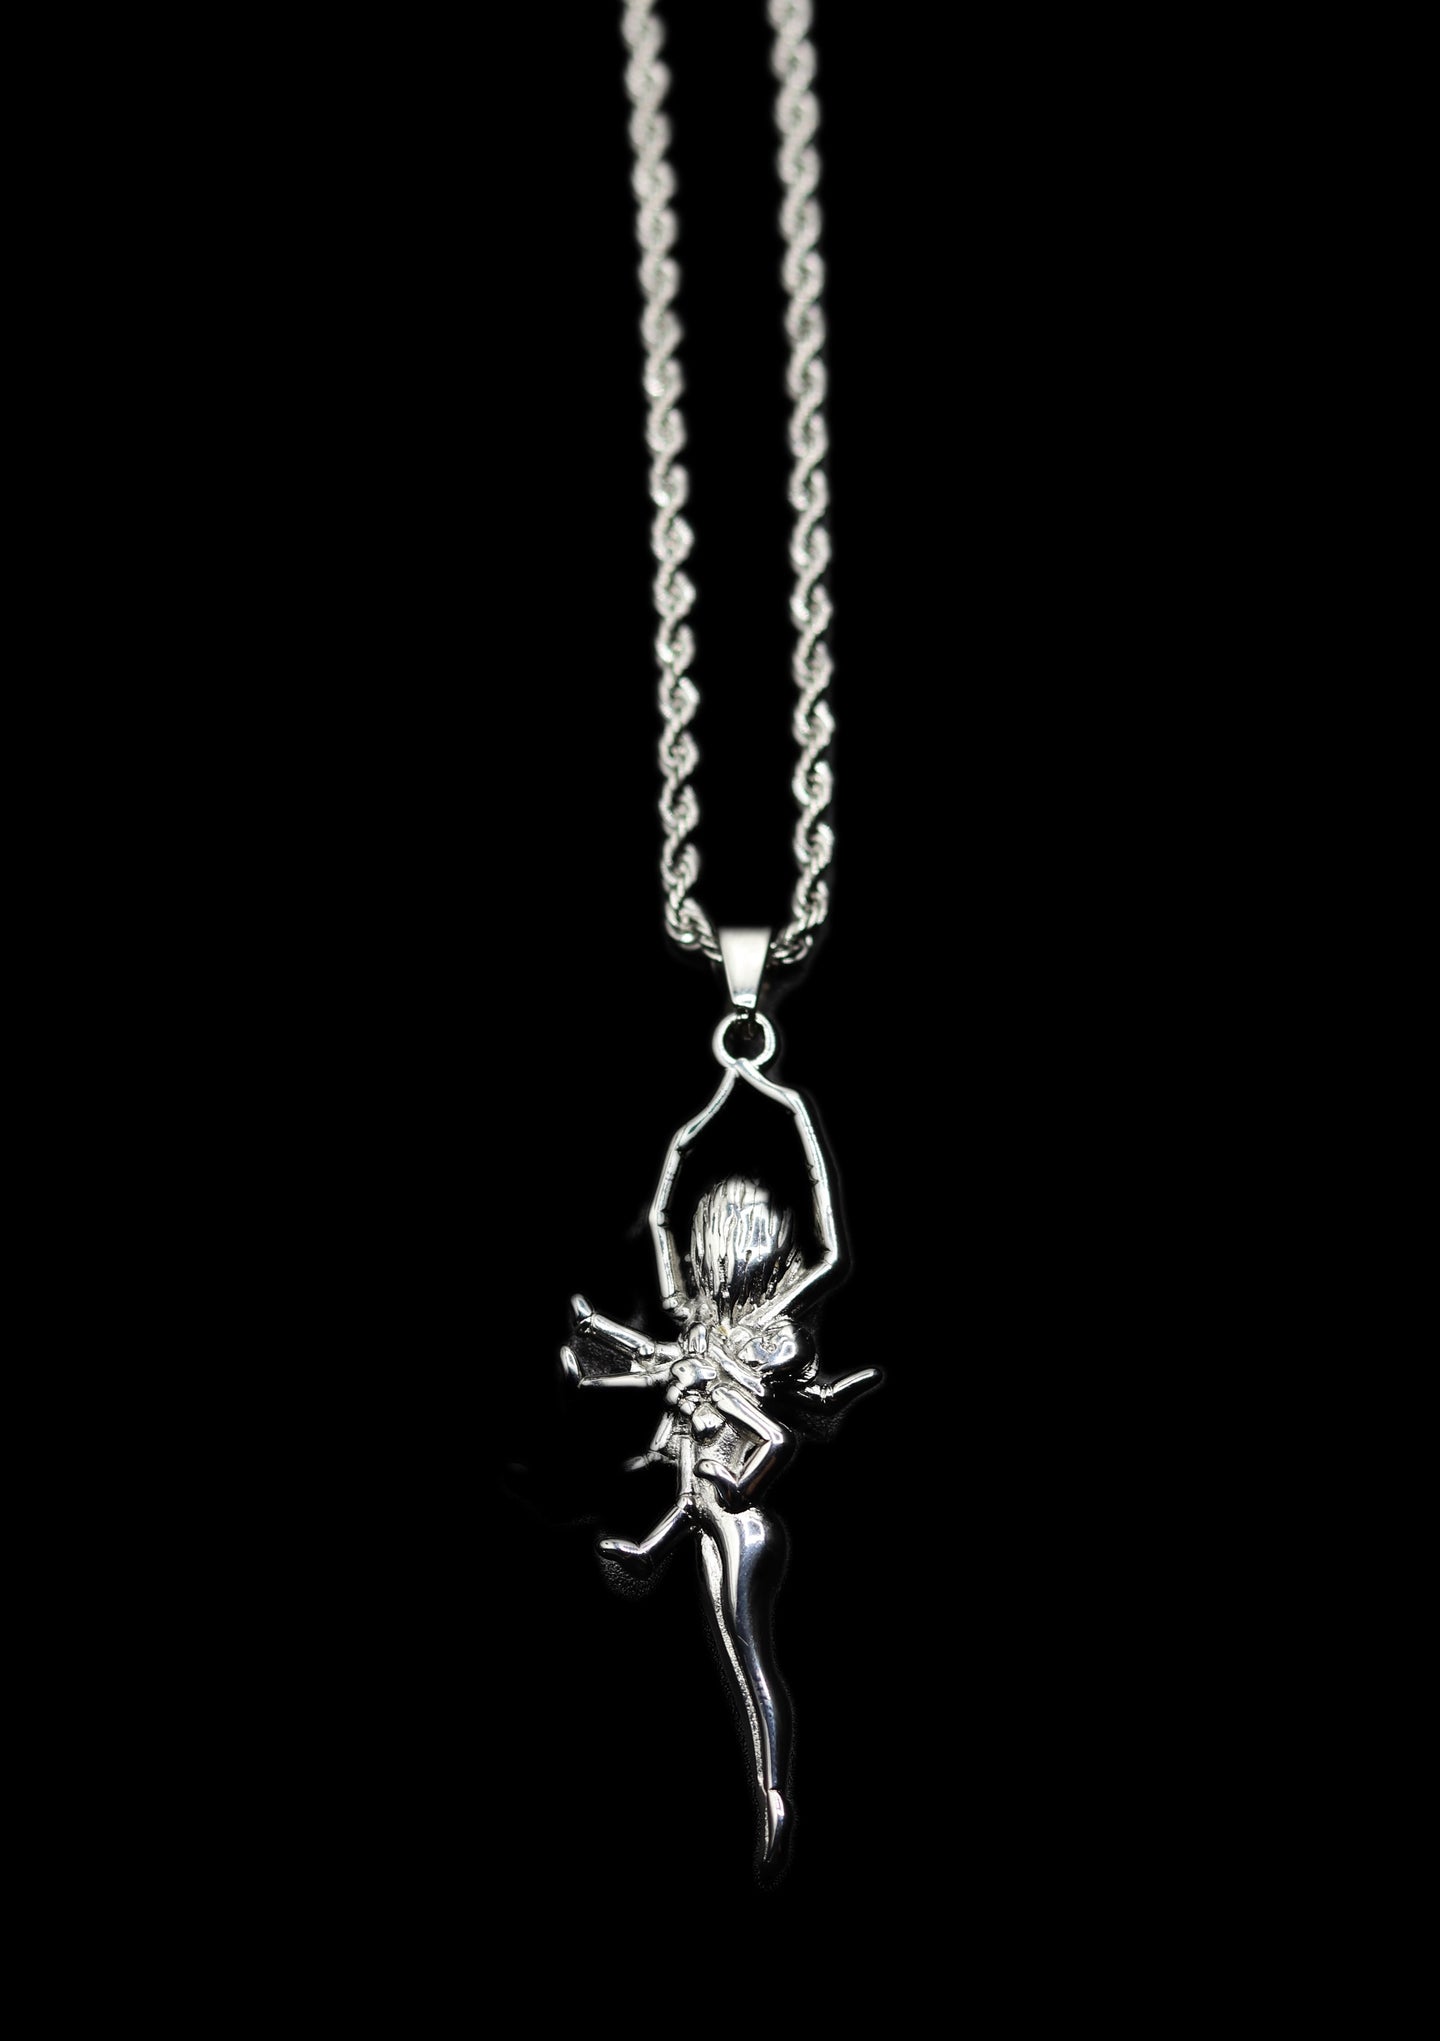 Spider Girl Necklace - Fashion Jewelry by Yordy.